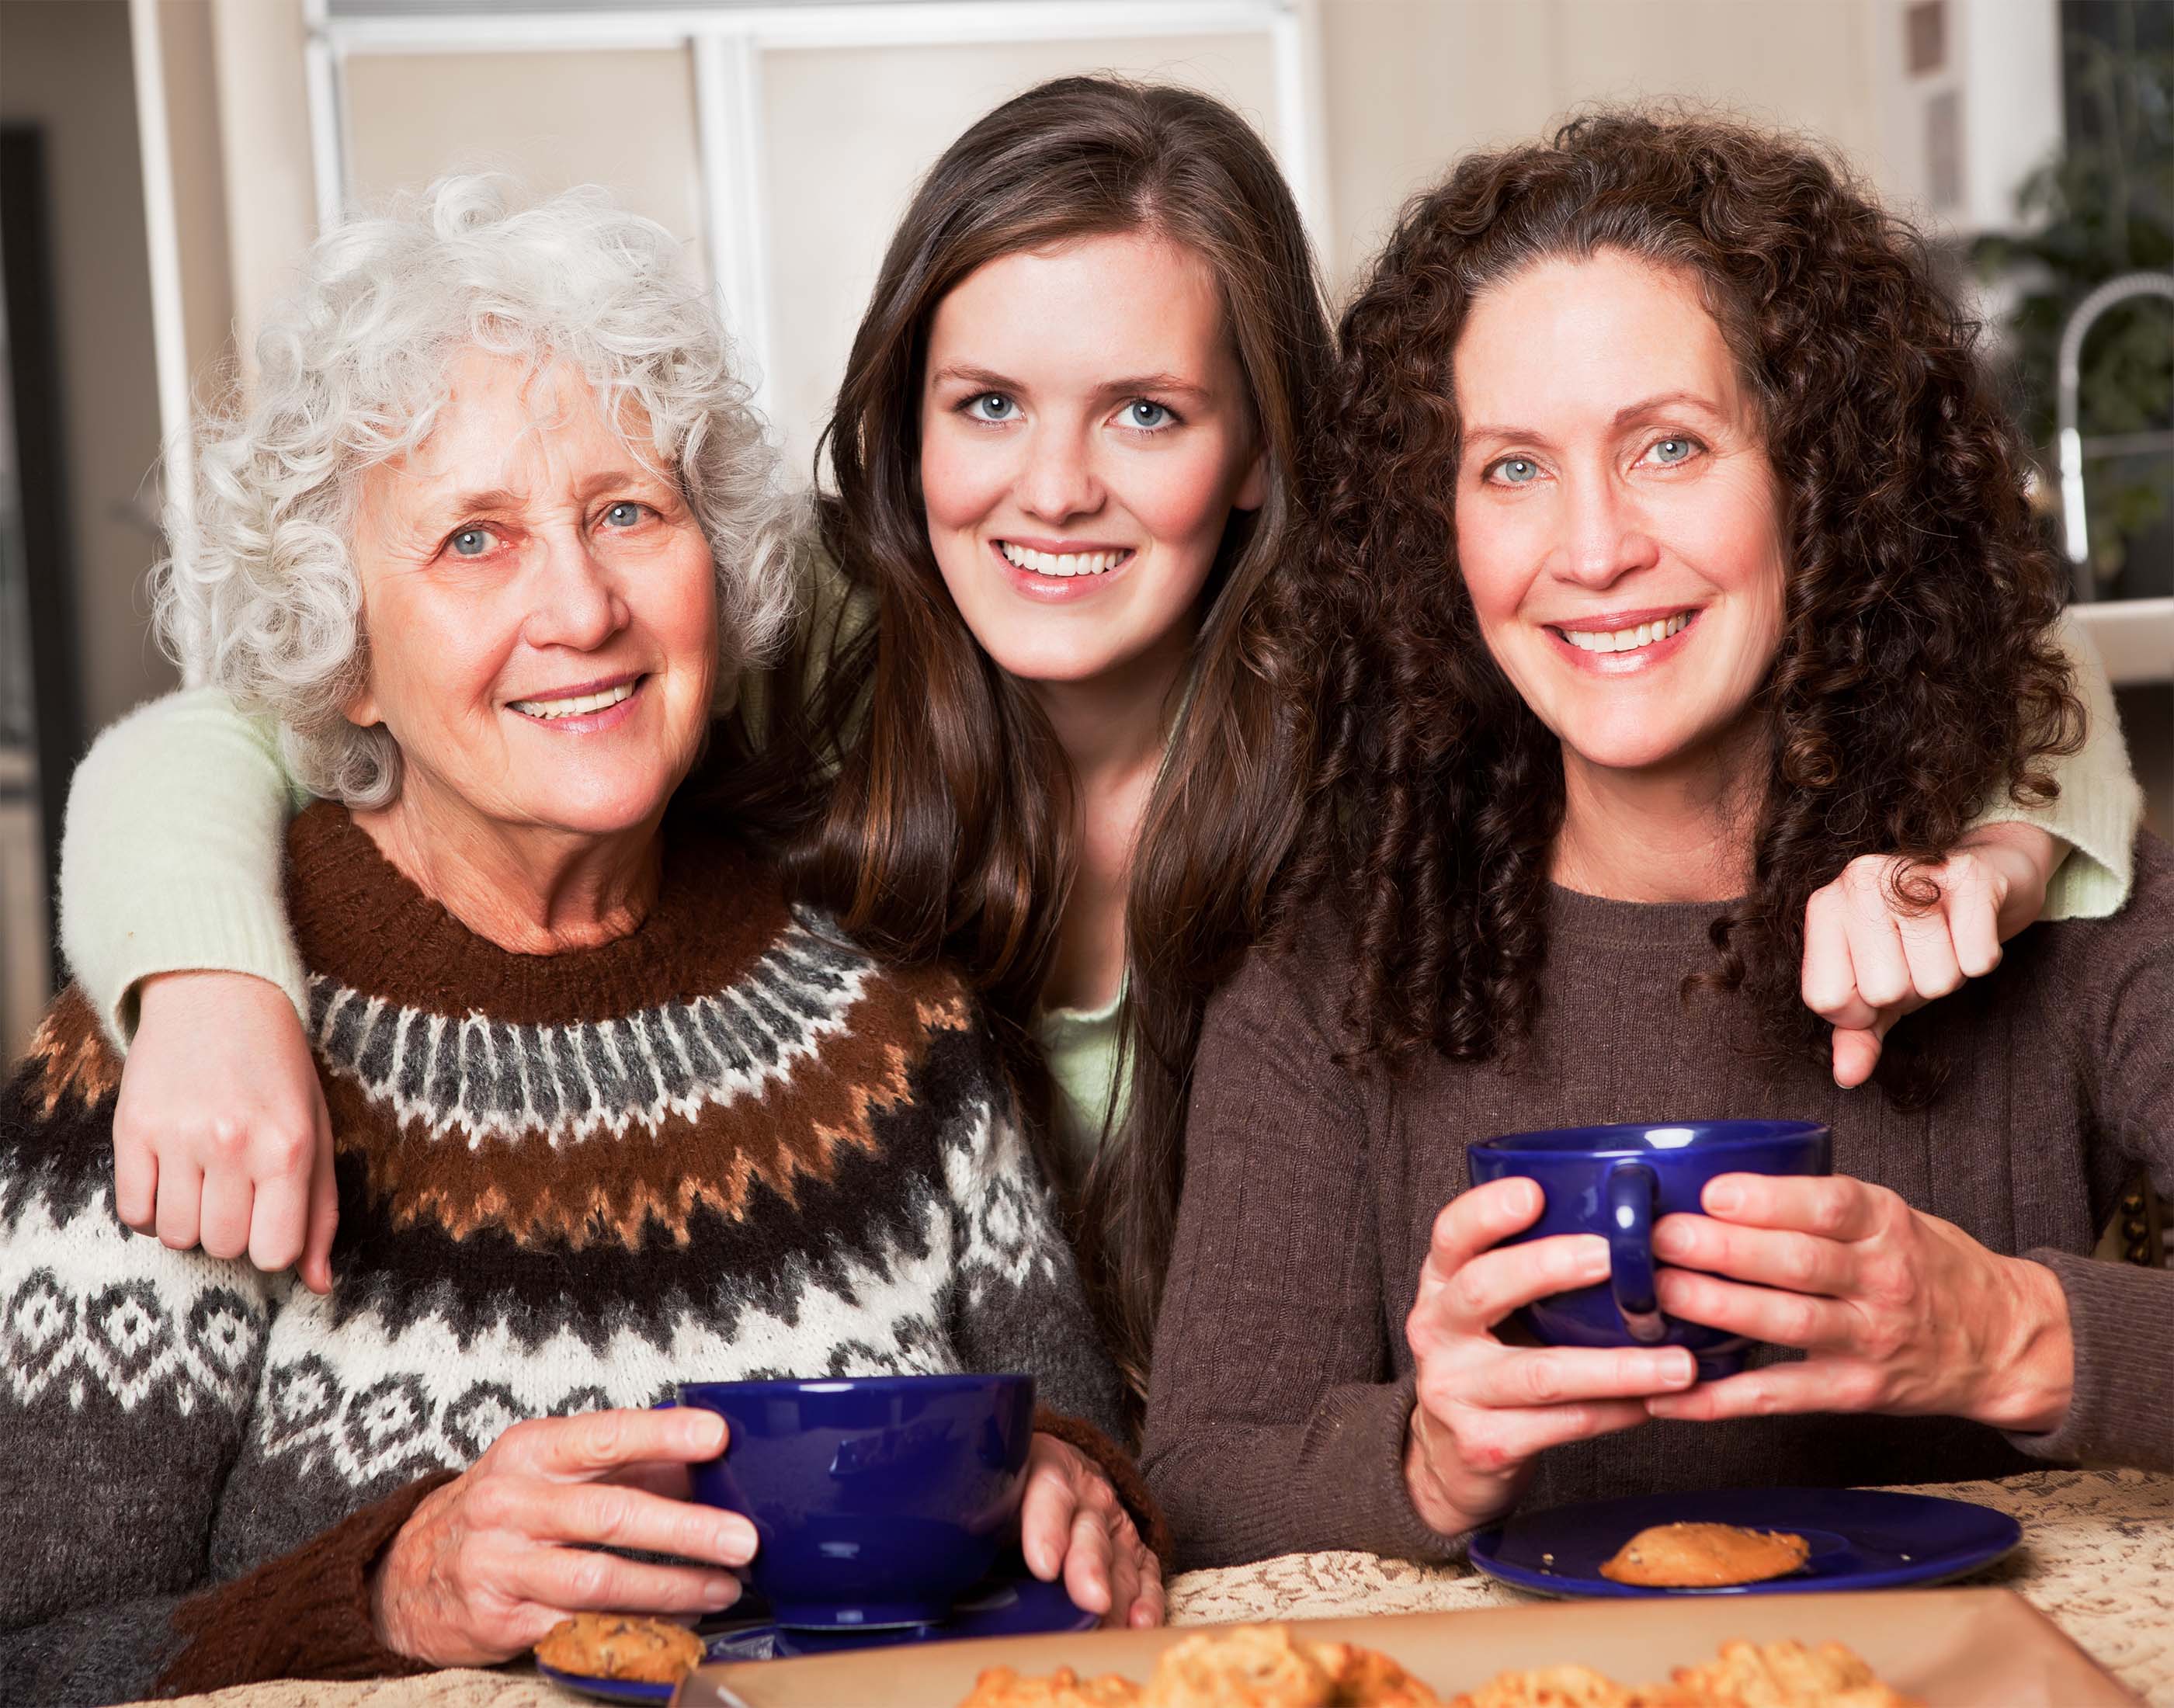 Three generations of women celebrate Women's History | OrnamentShop.com